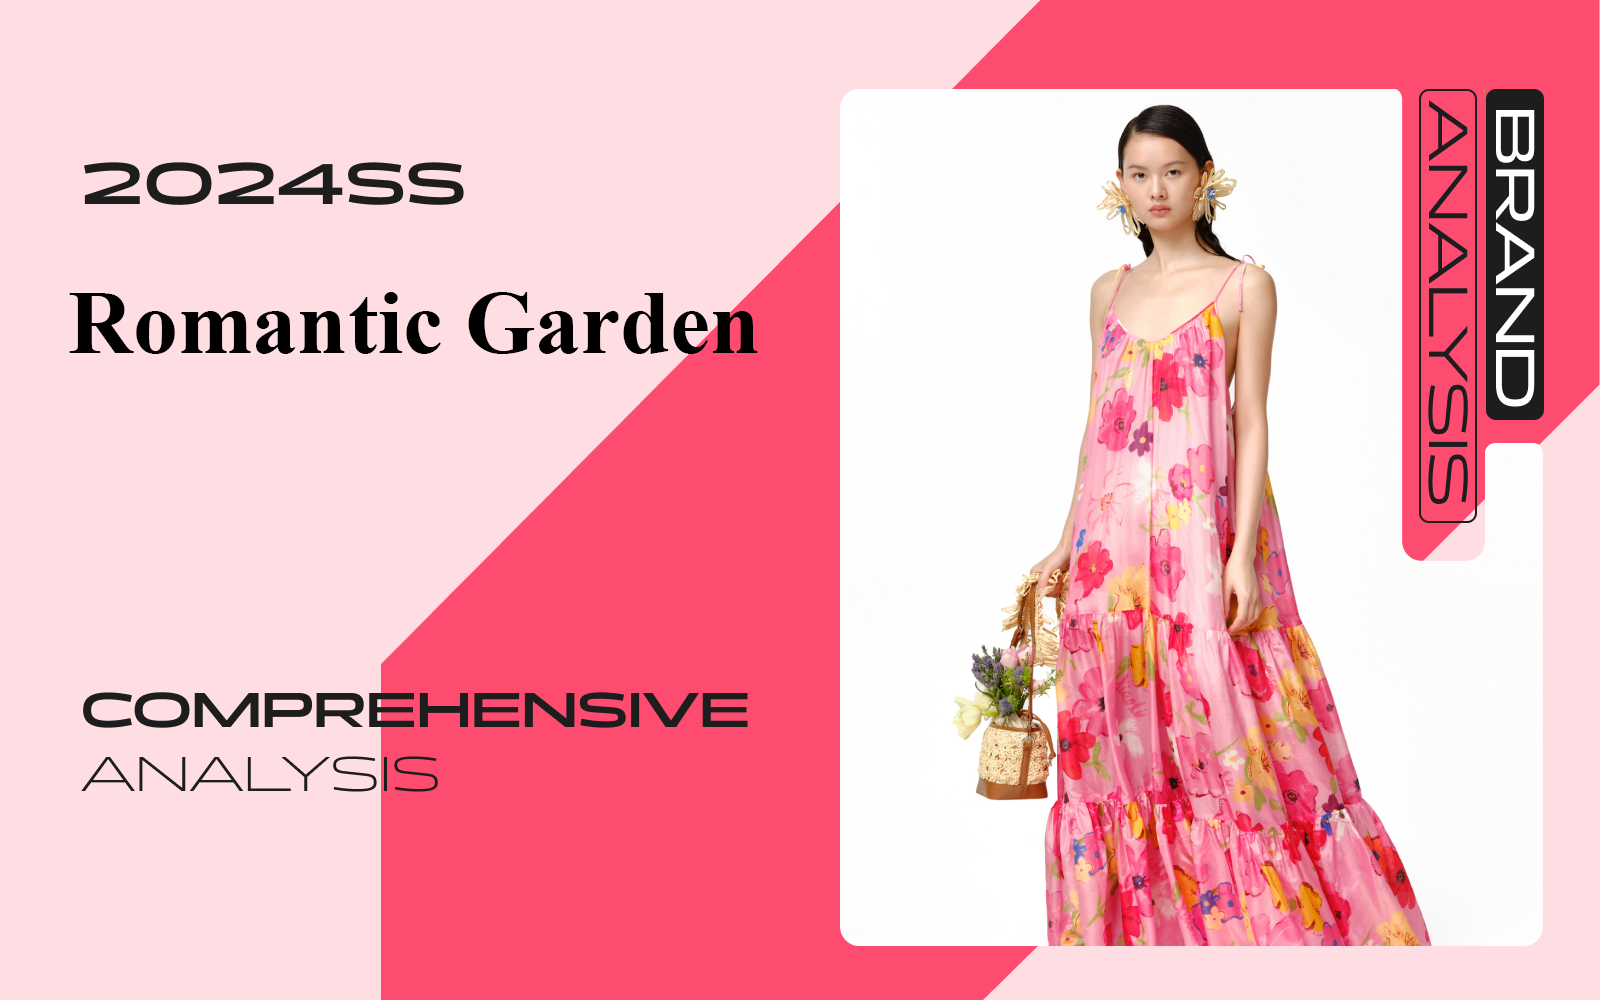 Romantic Garden -- The Comprehensive Analysis of Women's Fashion Designer Brands